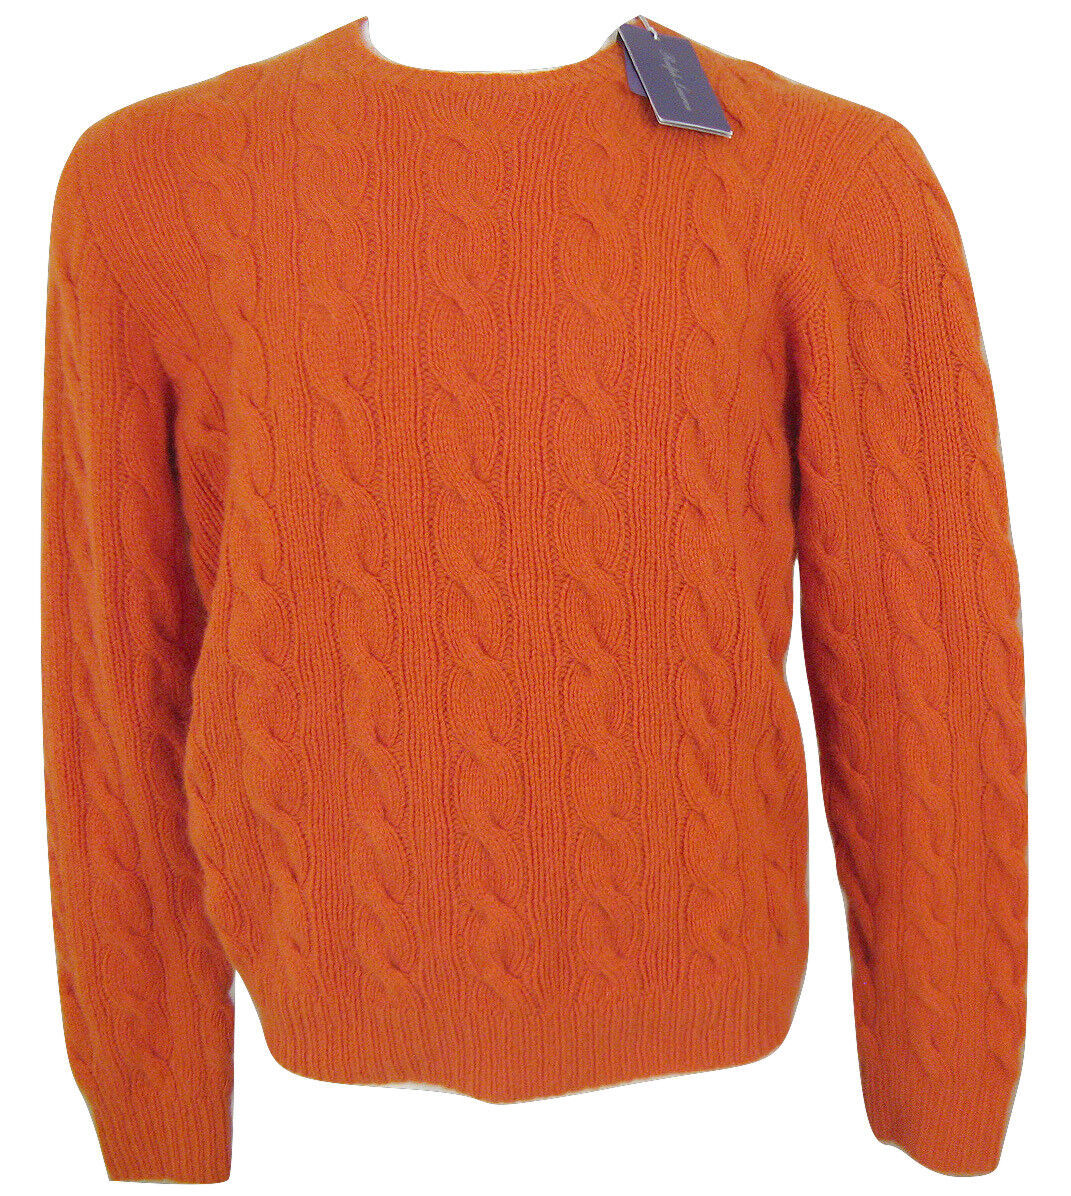 Primary image for NEW $995 Ralph Lauren Purple Label Handknit Cashmere Sweater!  L *Orange*  Heavy